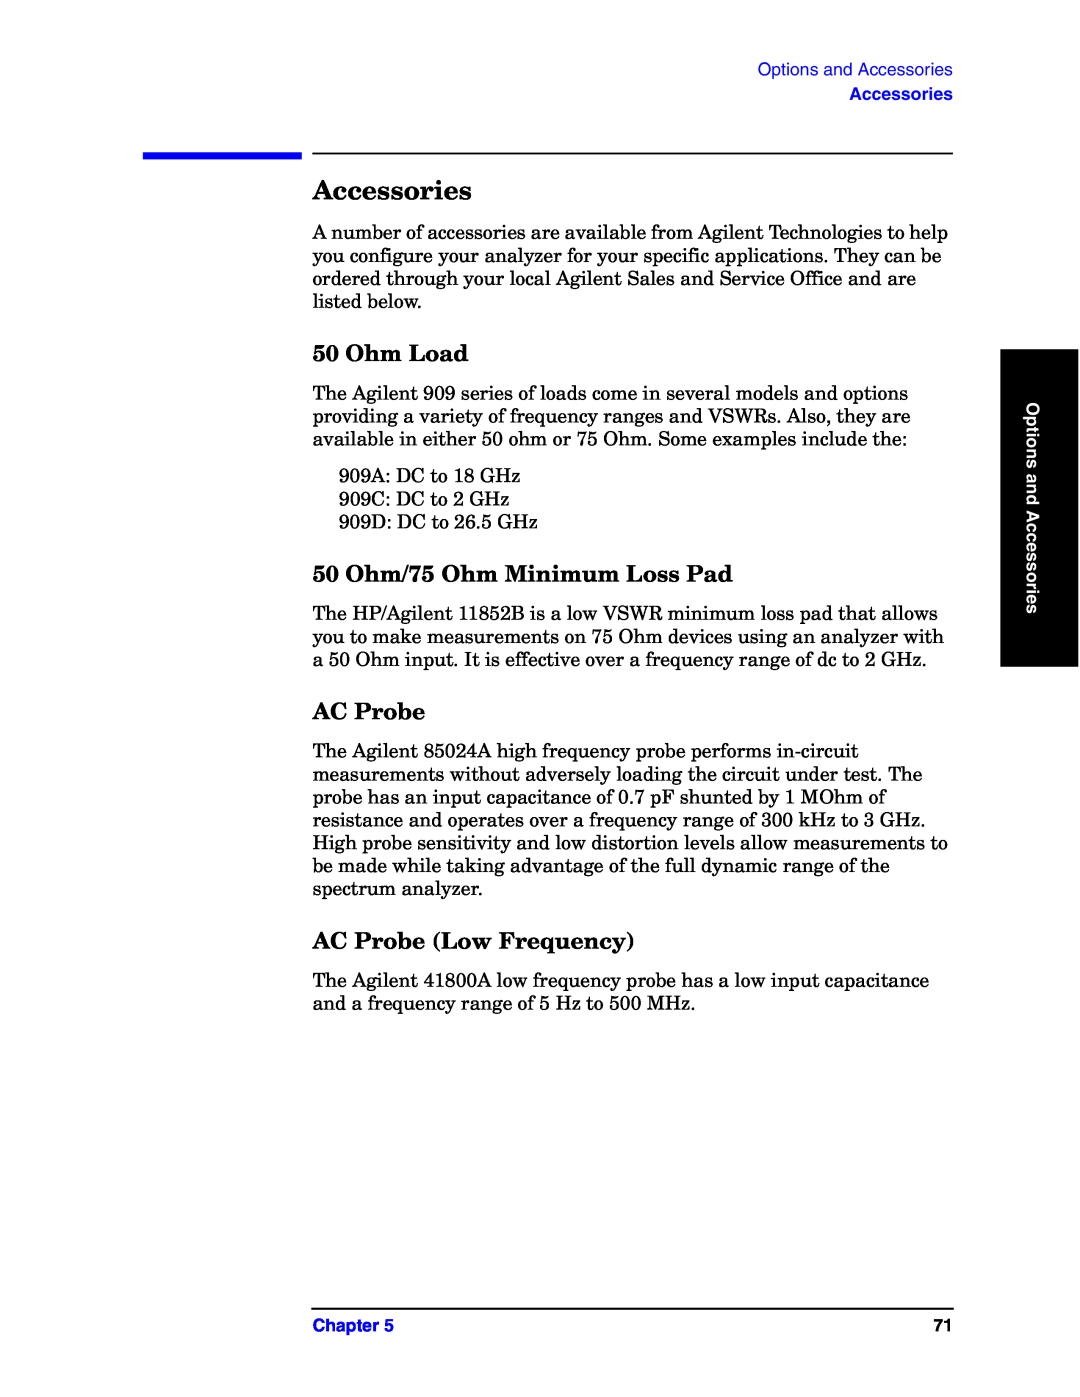 Agilent Technologies E4440A manual Accessories, Ohm Load, 50 Ohm/75 Ohm Minimum Loss Pad, AC Probe Low Frequency 